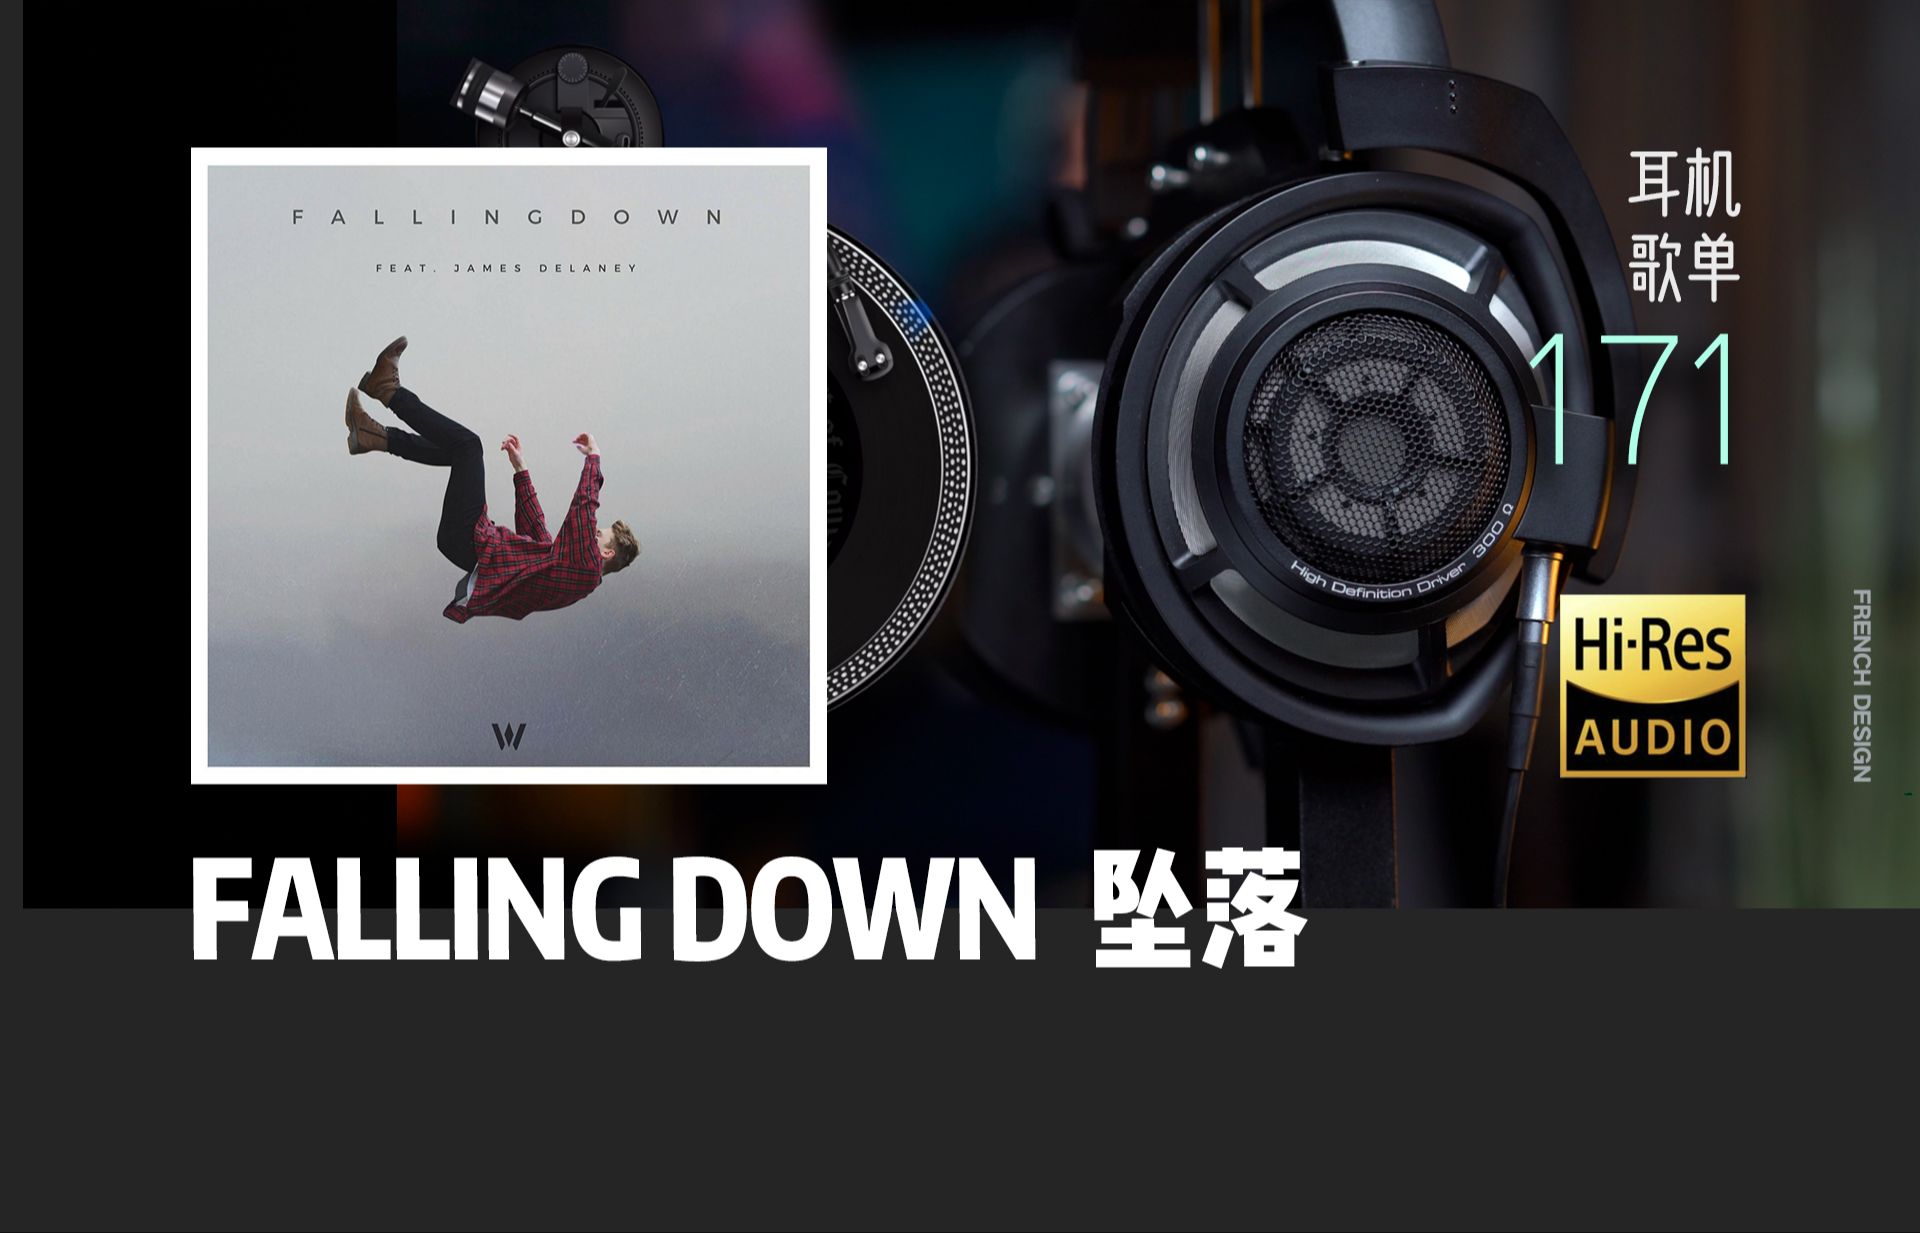 「宝藏神曲」坠落Falling Down - Wild Cards, James Delaney 最好的古典耳机之一听【Hi-Res】